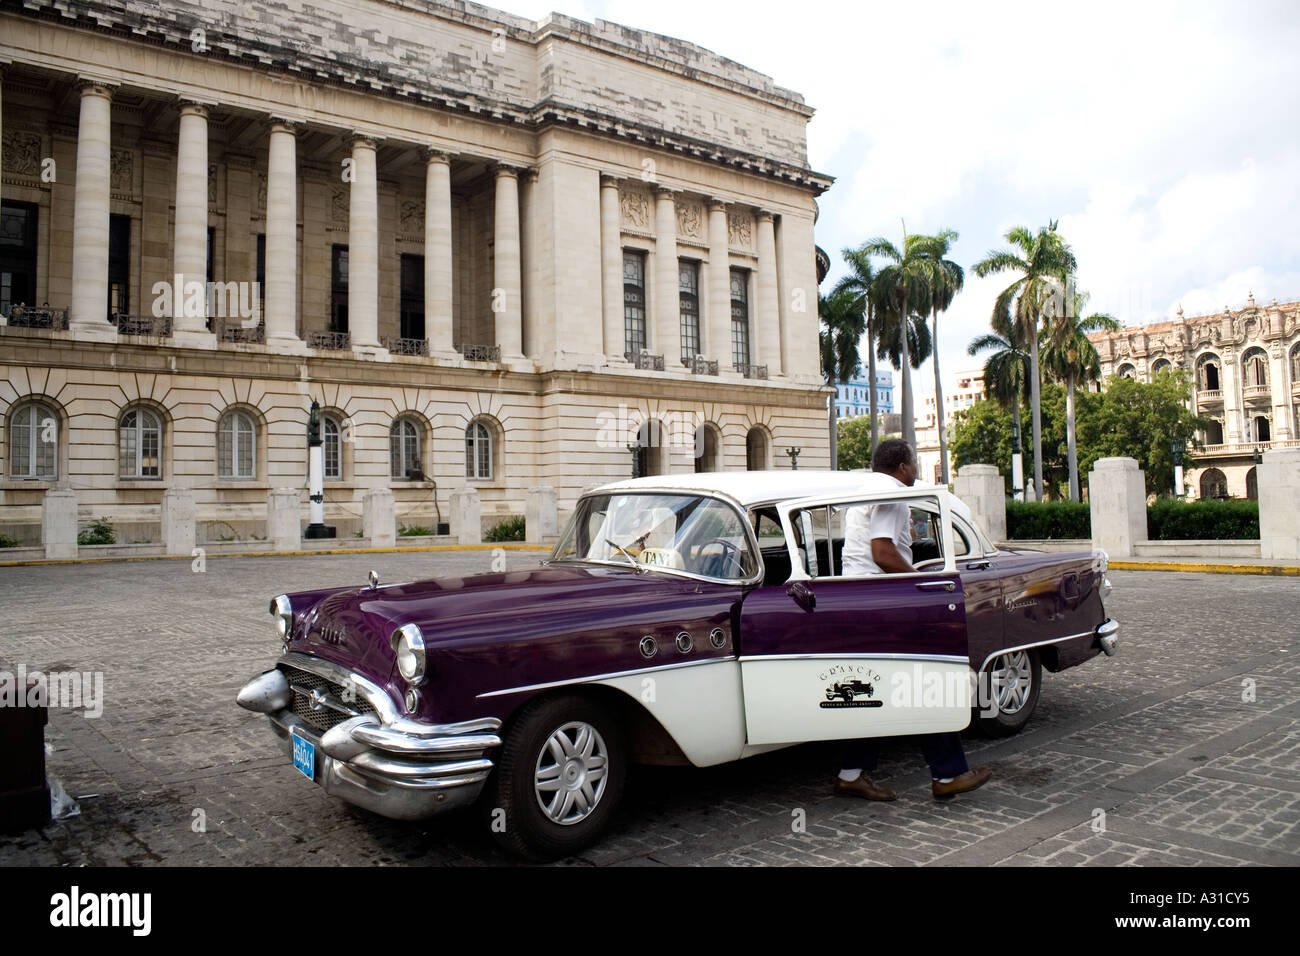 Old American Buick car outside the Capitolio Nacional, Havana, Cuba Stock Photo